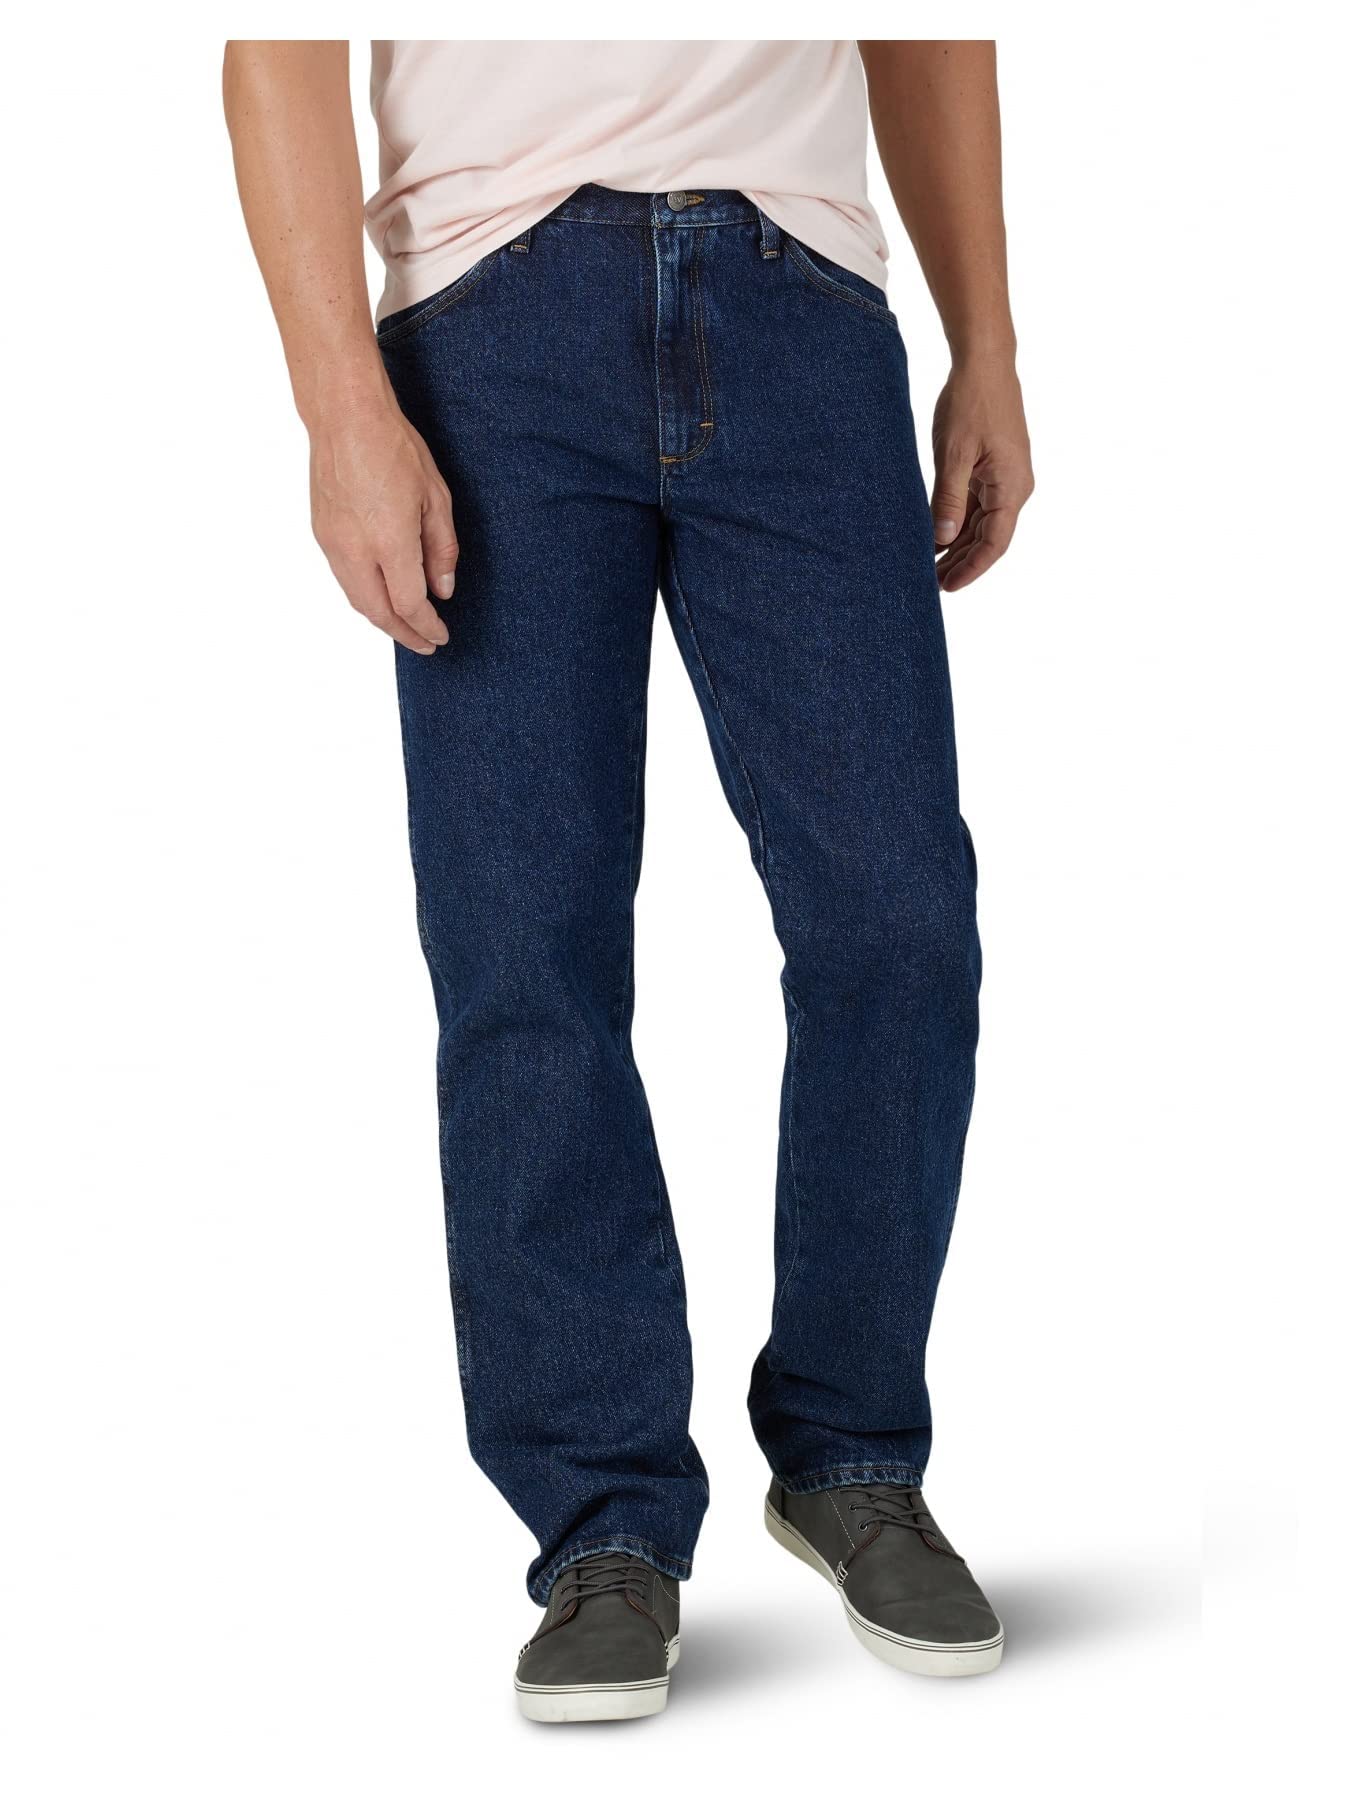 Wrangler Authentics Men's Classic 5-Pocket Regular Fit Cotton Jean, Dark Rinse, 38W x 30L